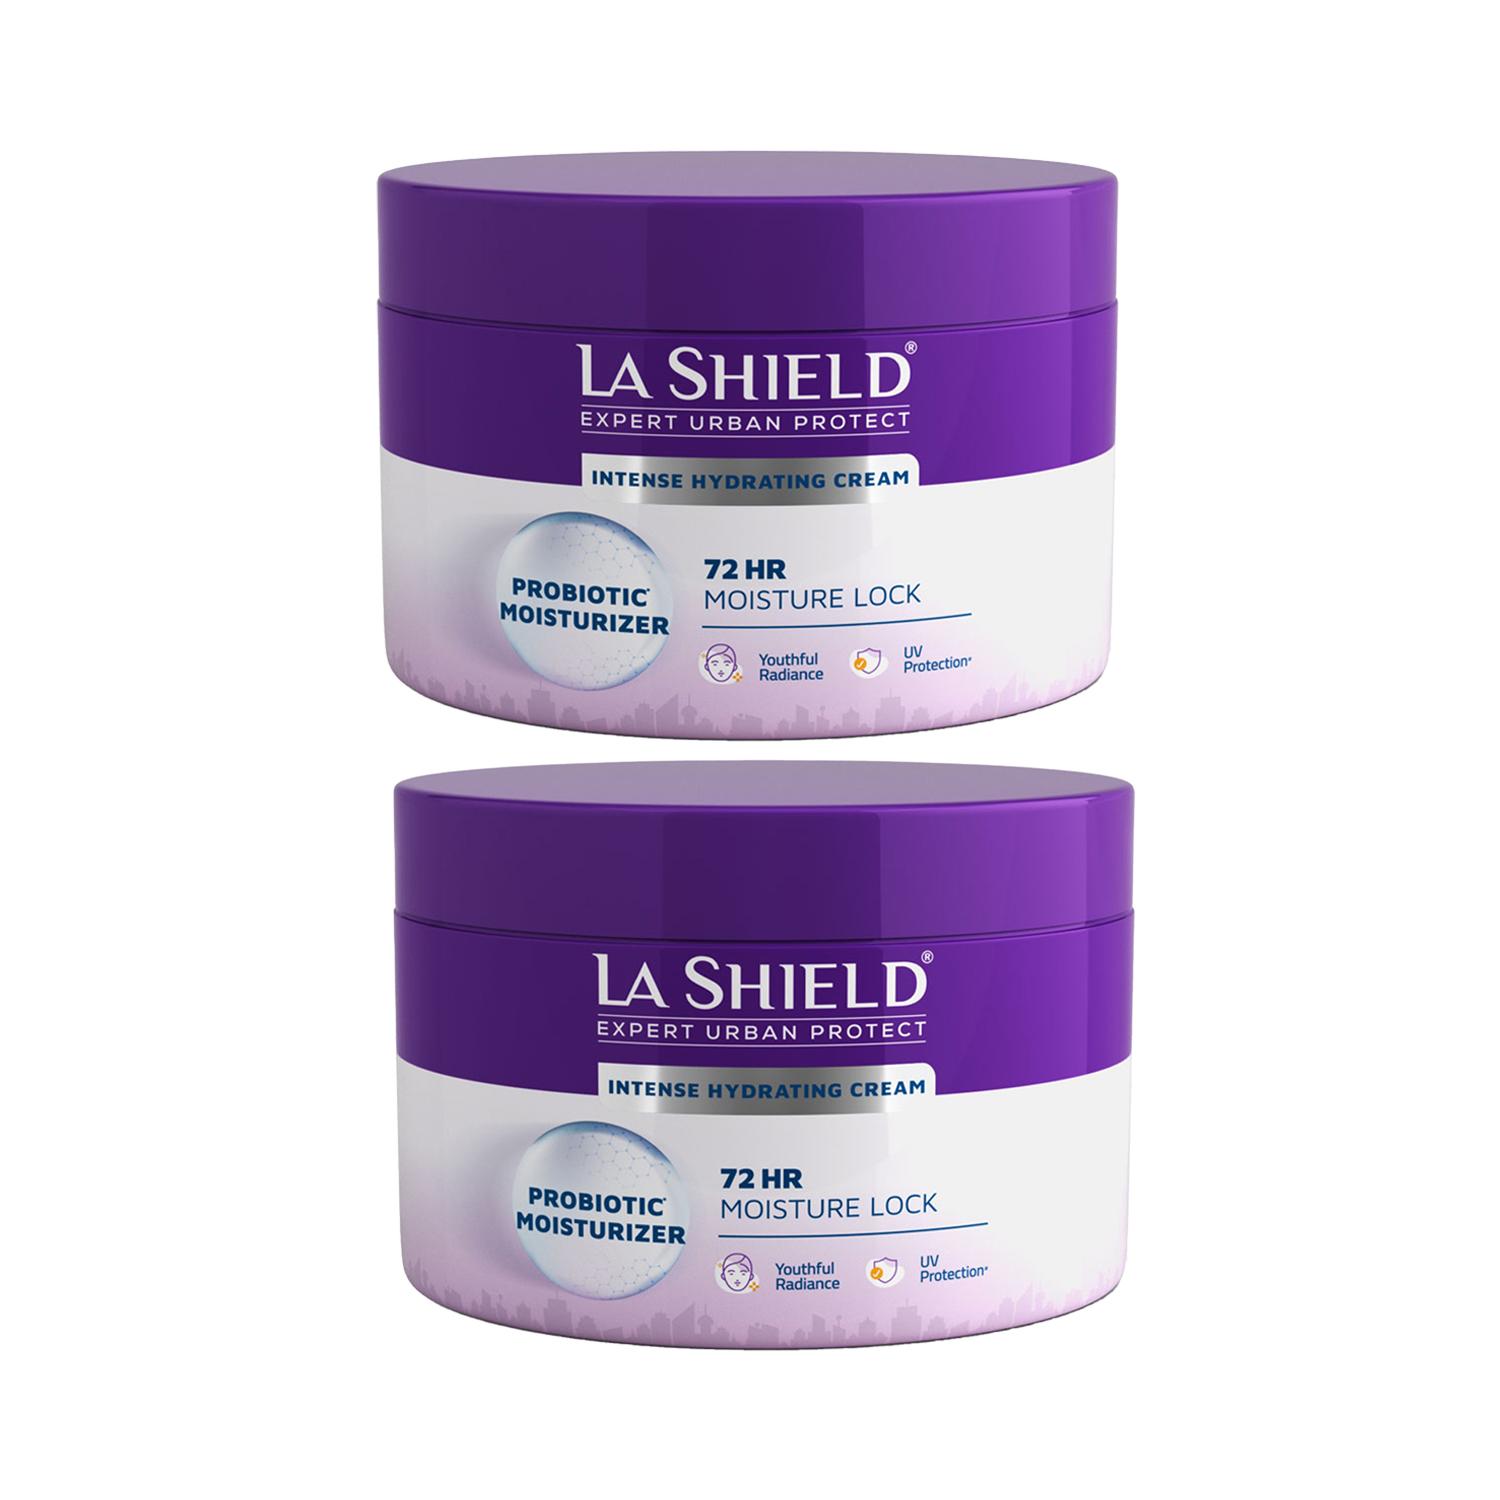 La Shield | La Shield Intense Hydrating Cream Probiotic Moisturizing Cream Pack of 2 (50 g)